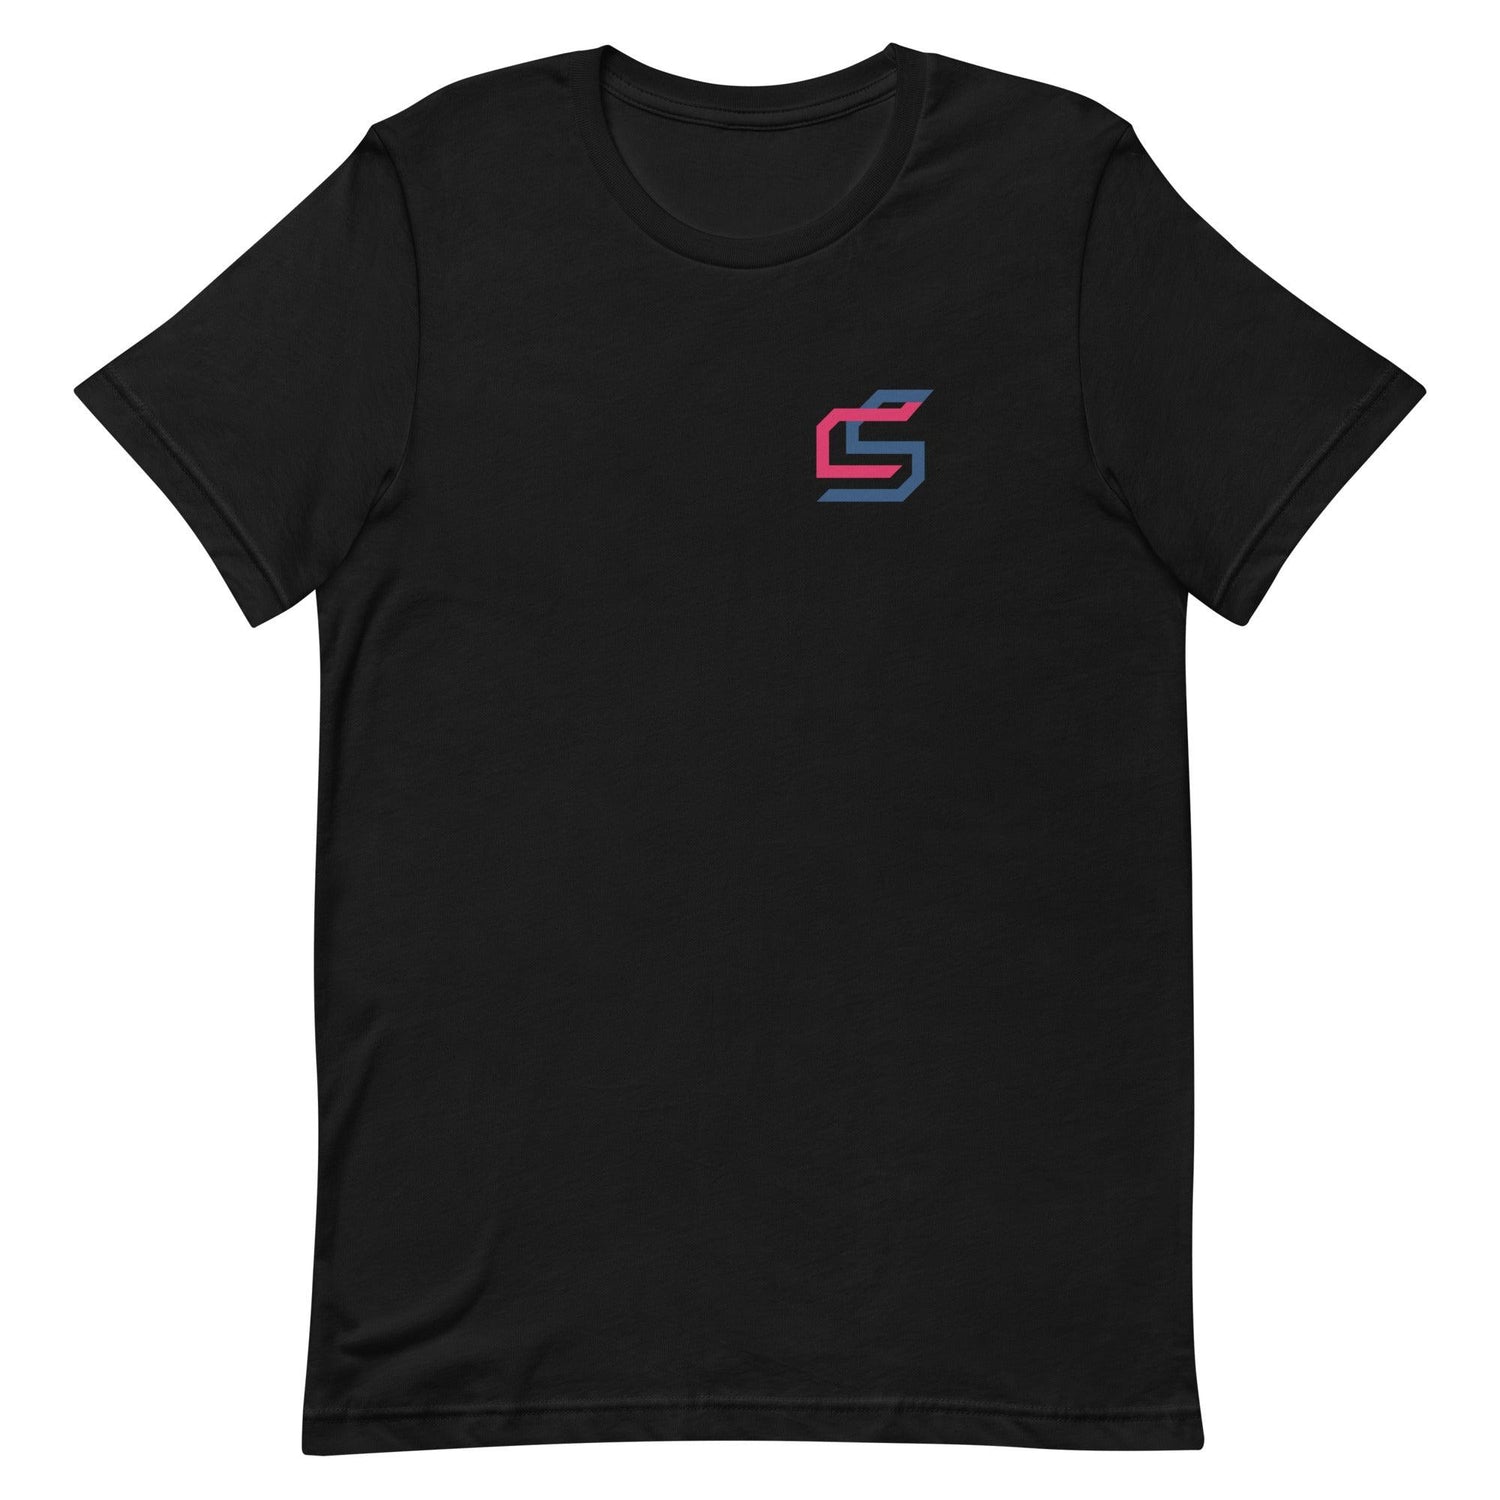 Cortrelle Simpson "Essential" t-shirt - Fan Arch